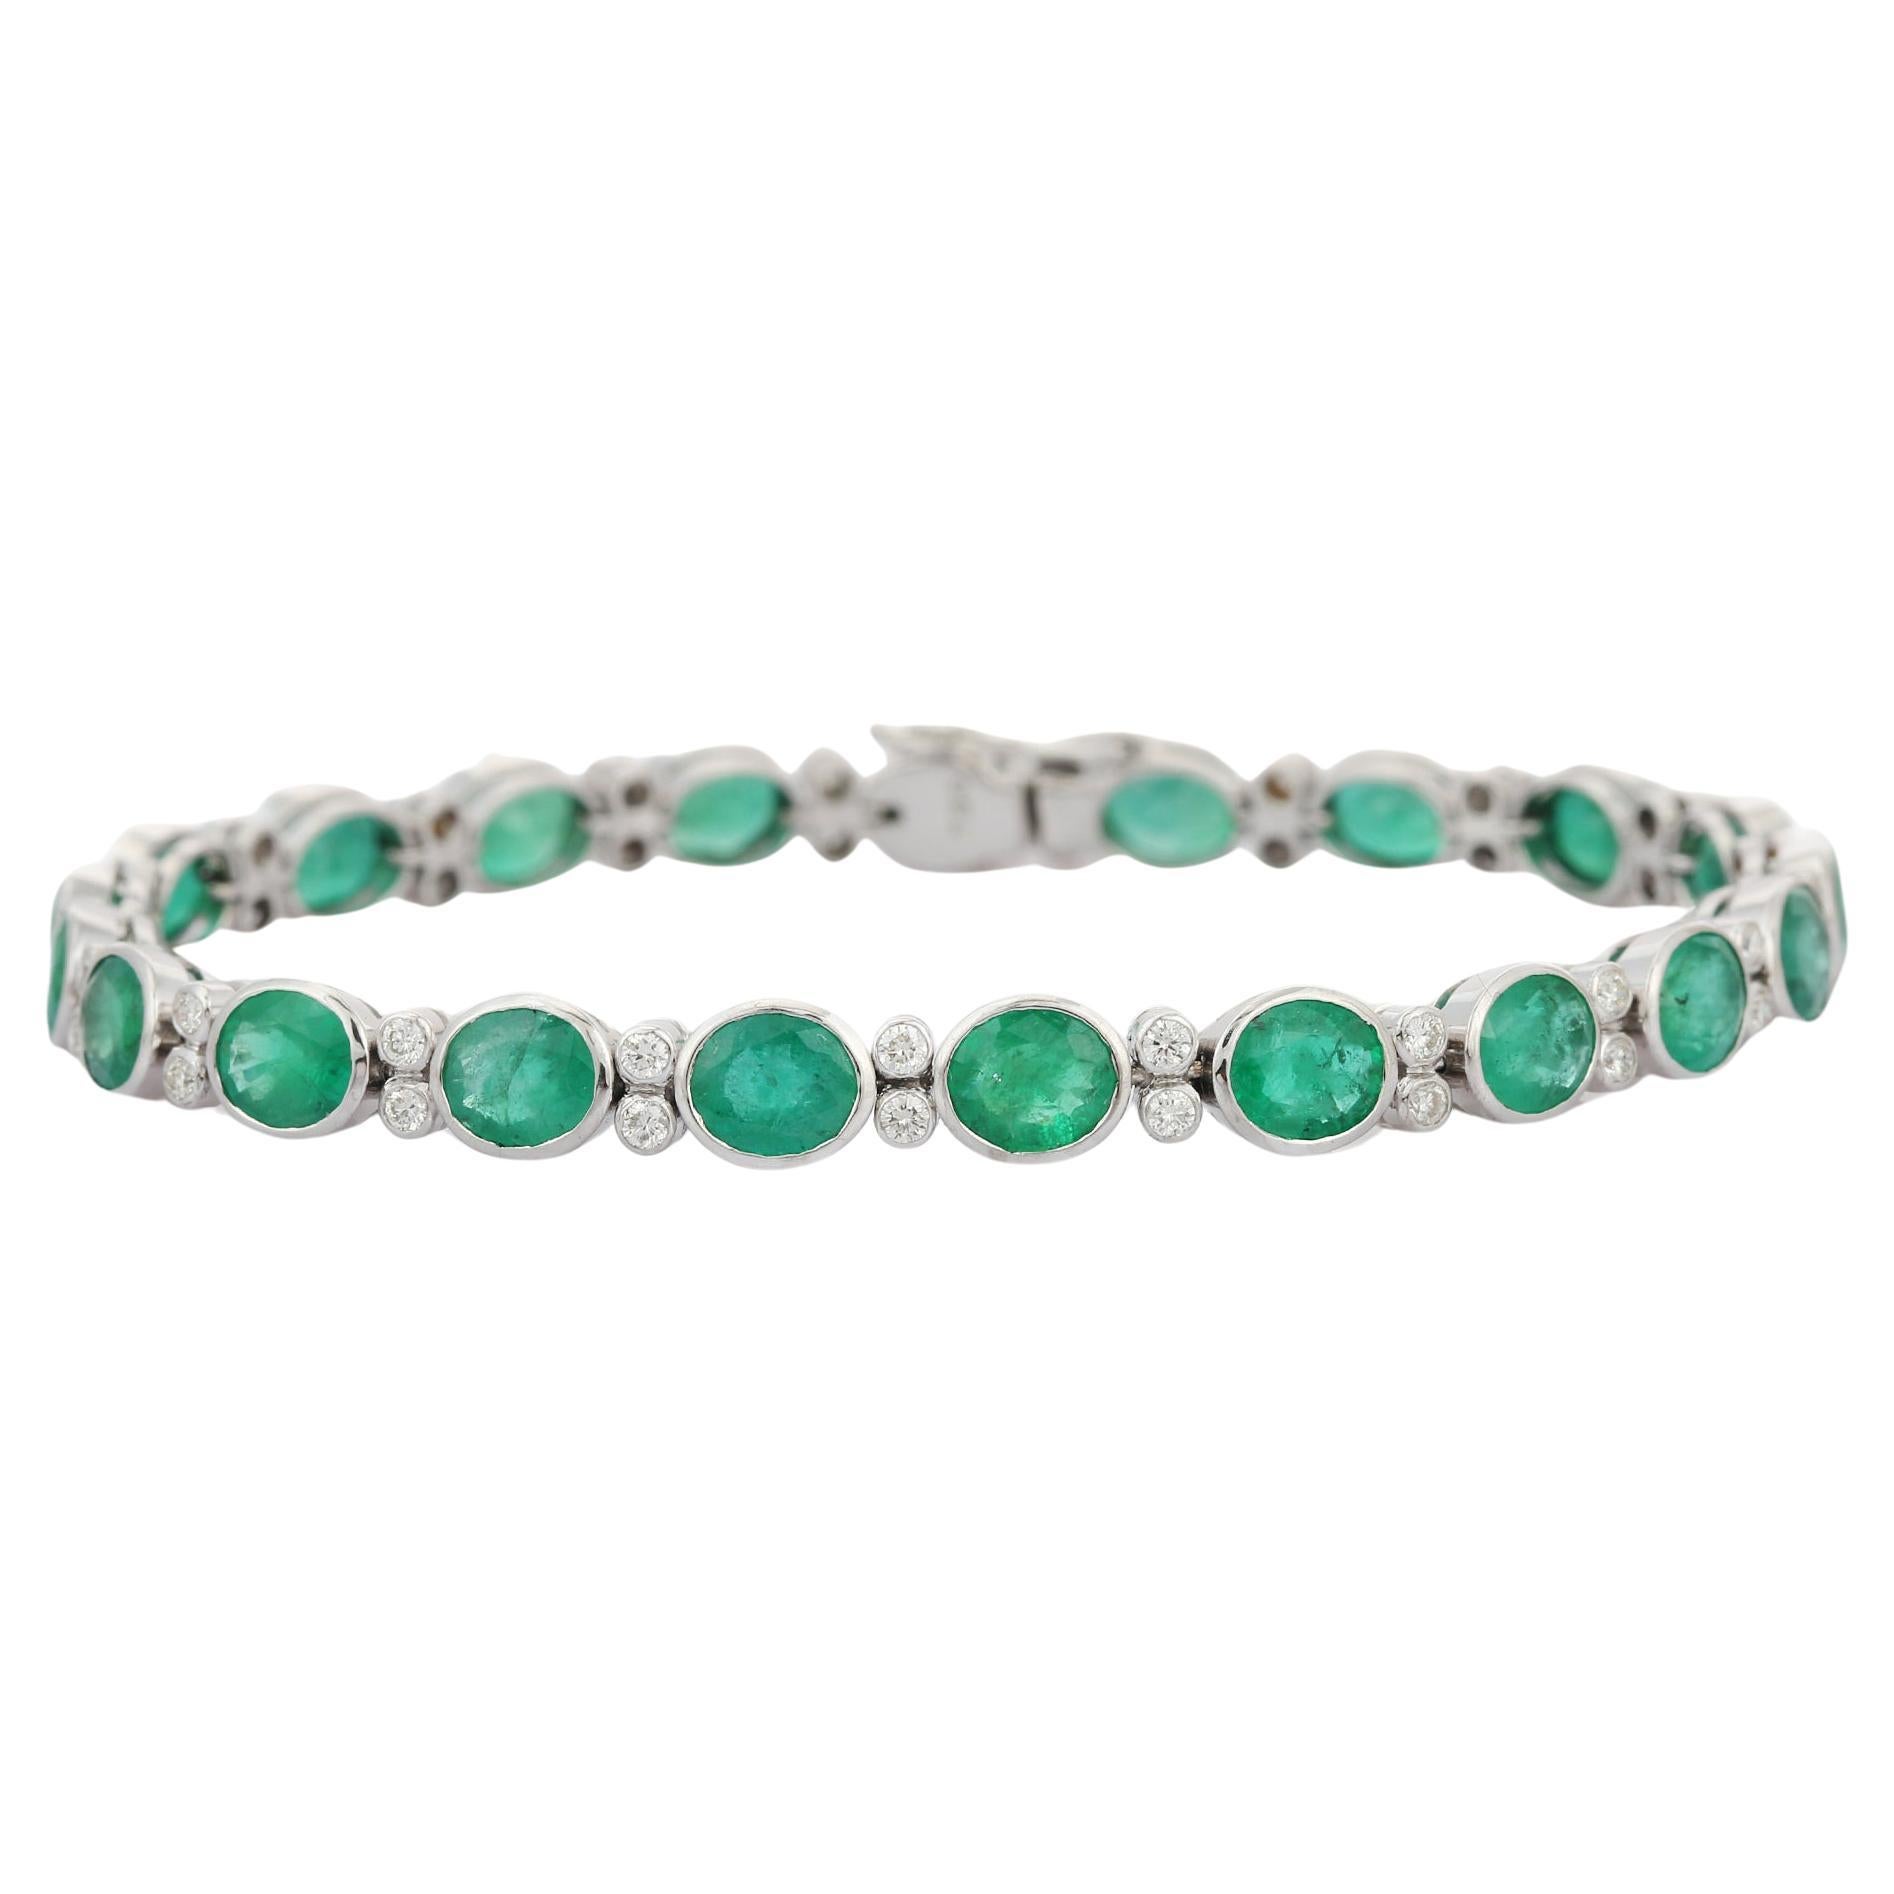 Impeccable Art Deco Style Emerald and Diamond Bracelet in 18 Karat White Gold  